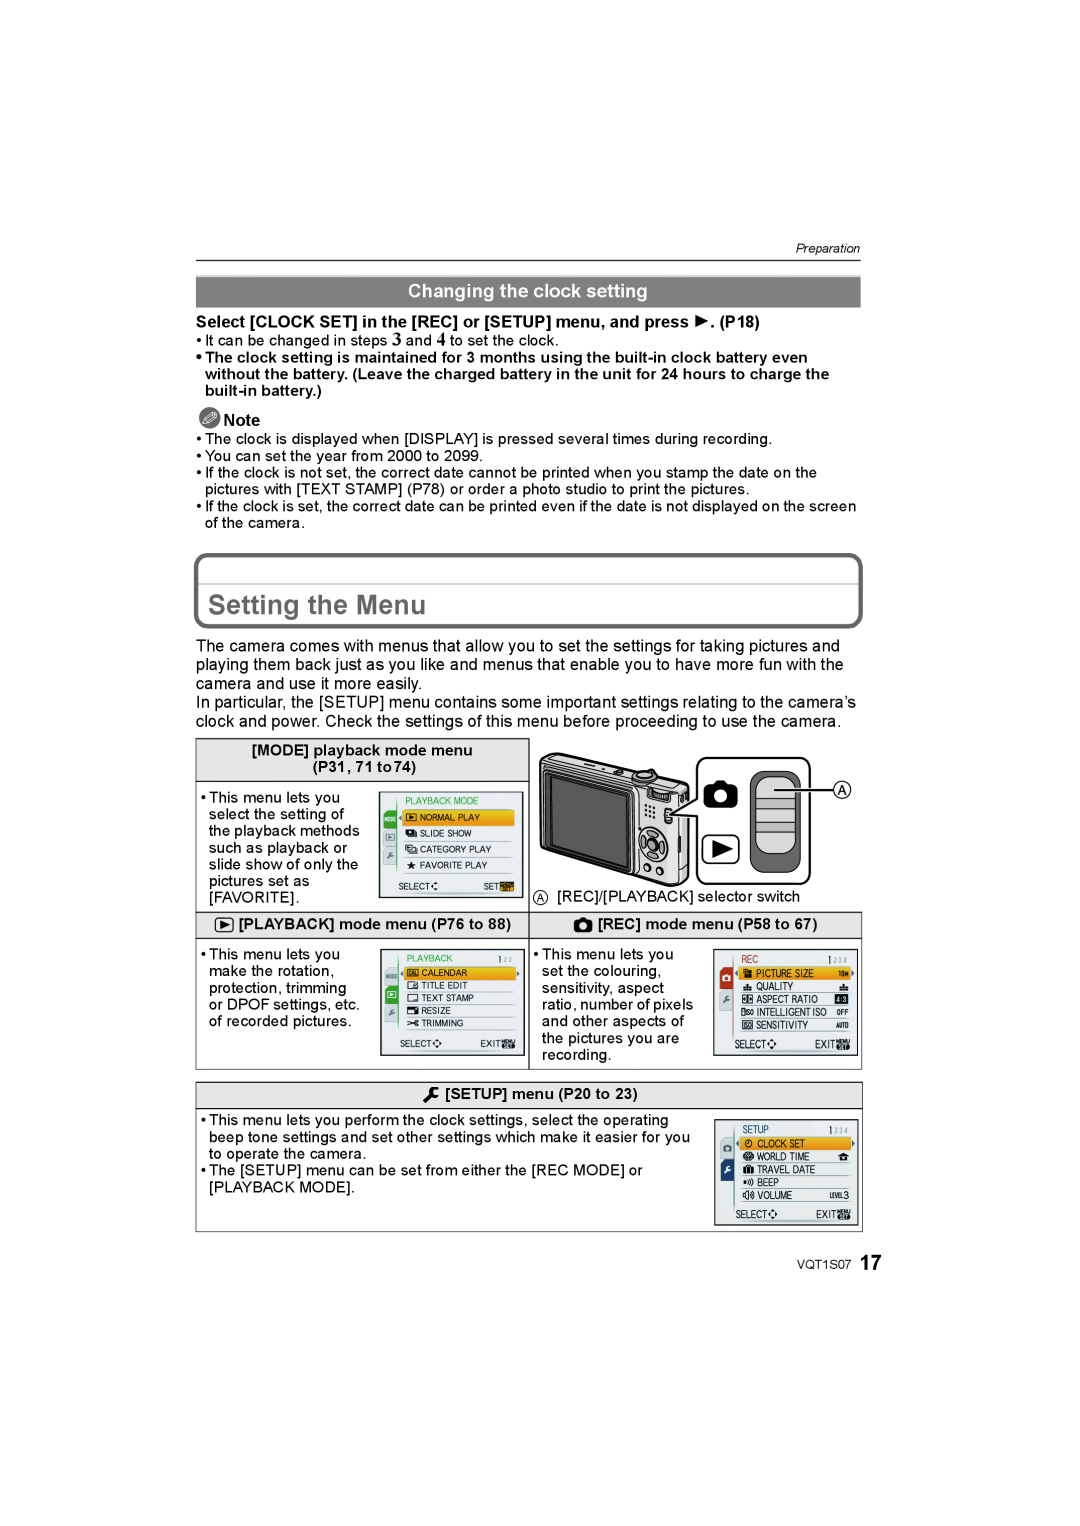 Panasonic DMC-FX38 operating instructions Setting the Menu, Changing the clock setting 